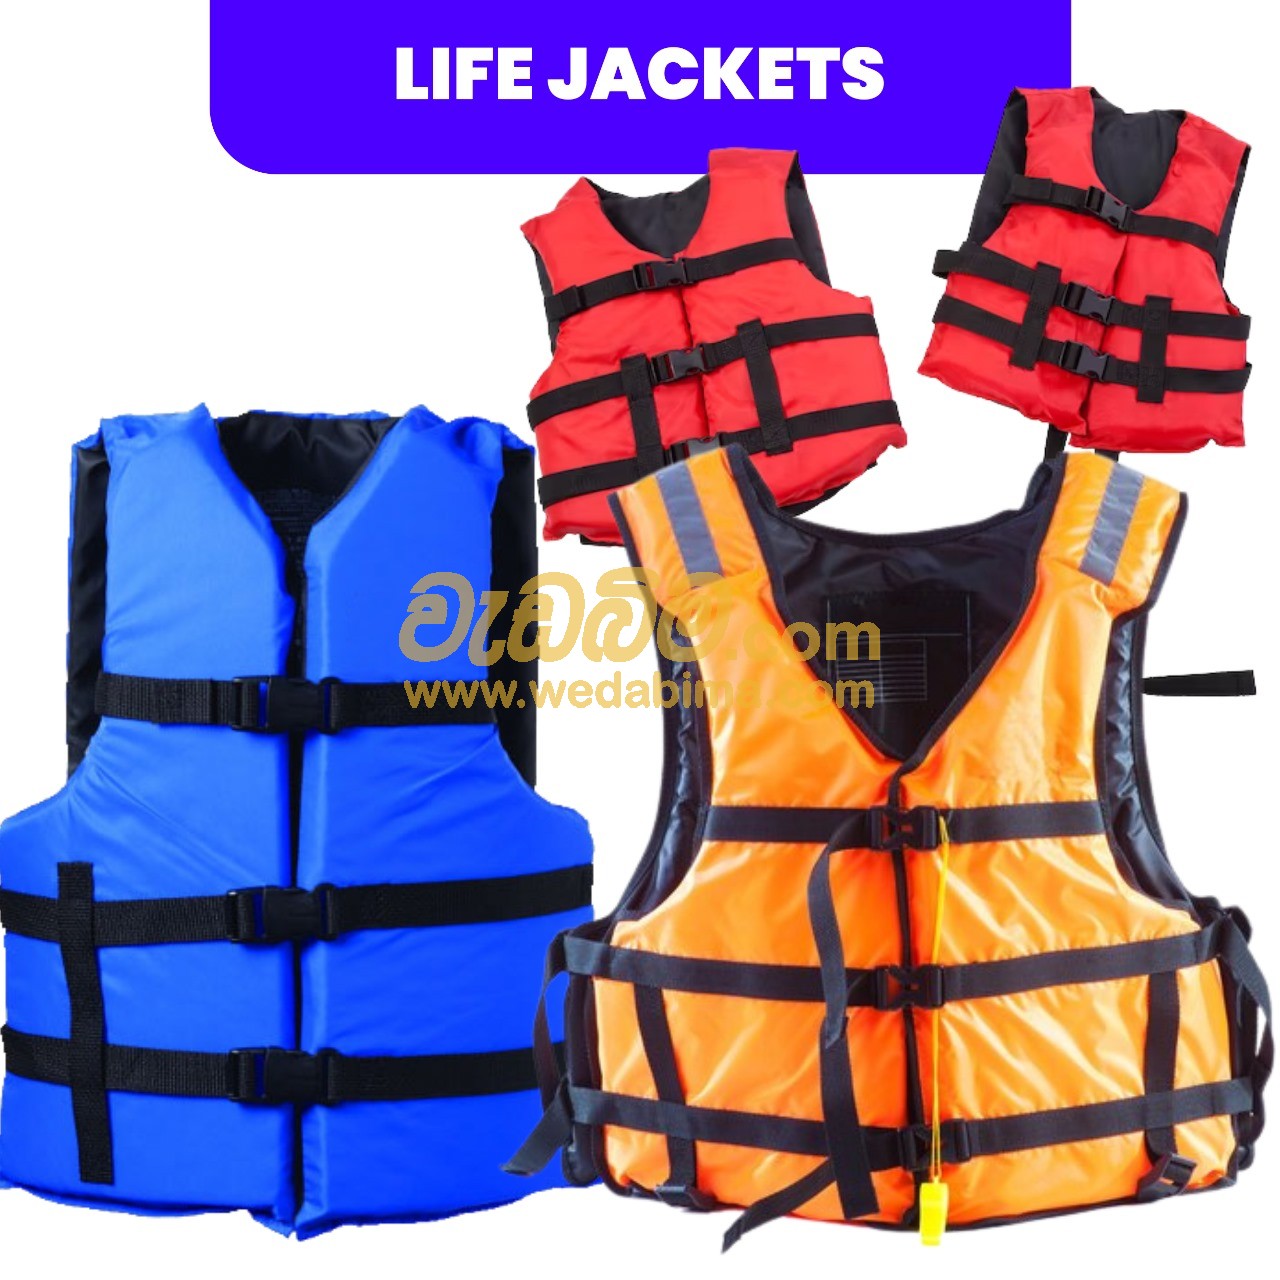 Cover image for Safety Jackets for Sale Sri Lanka